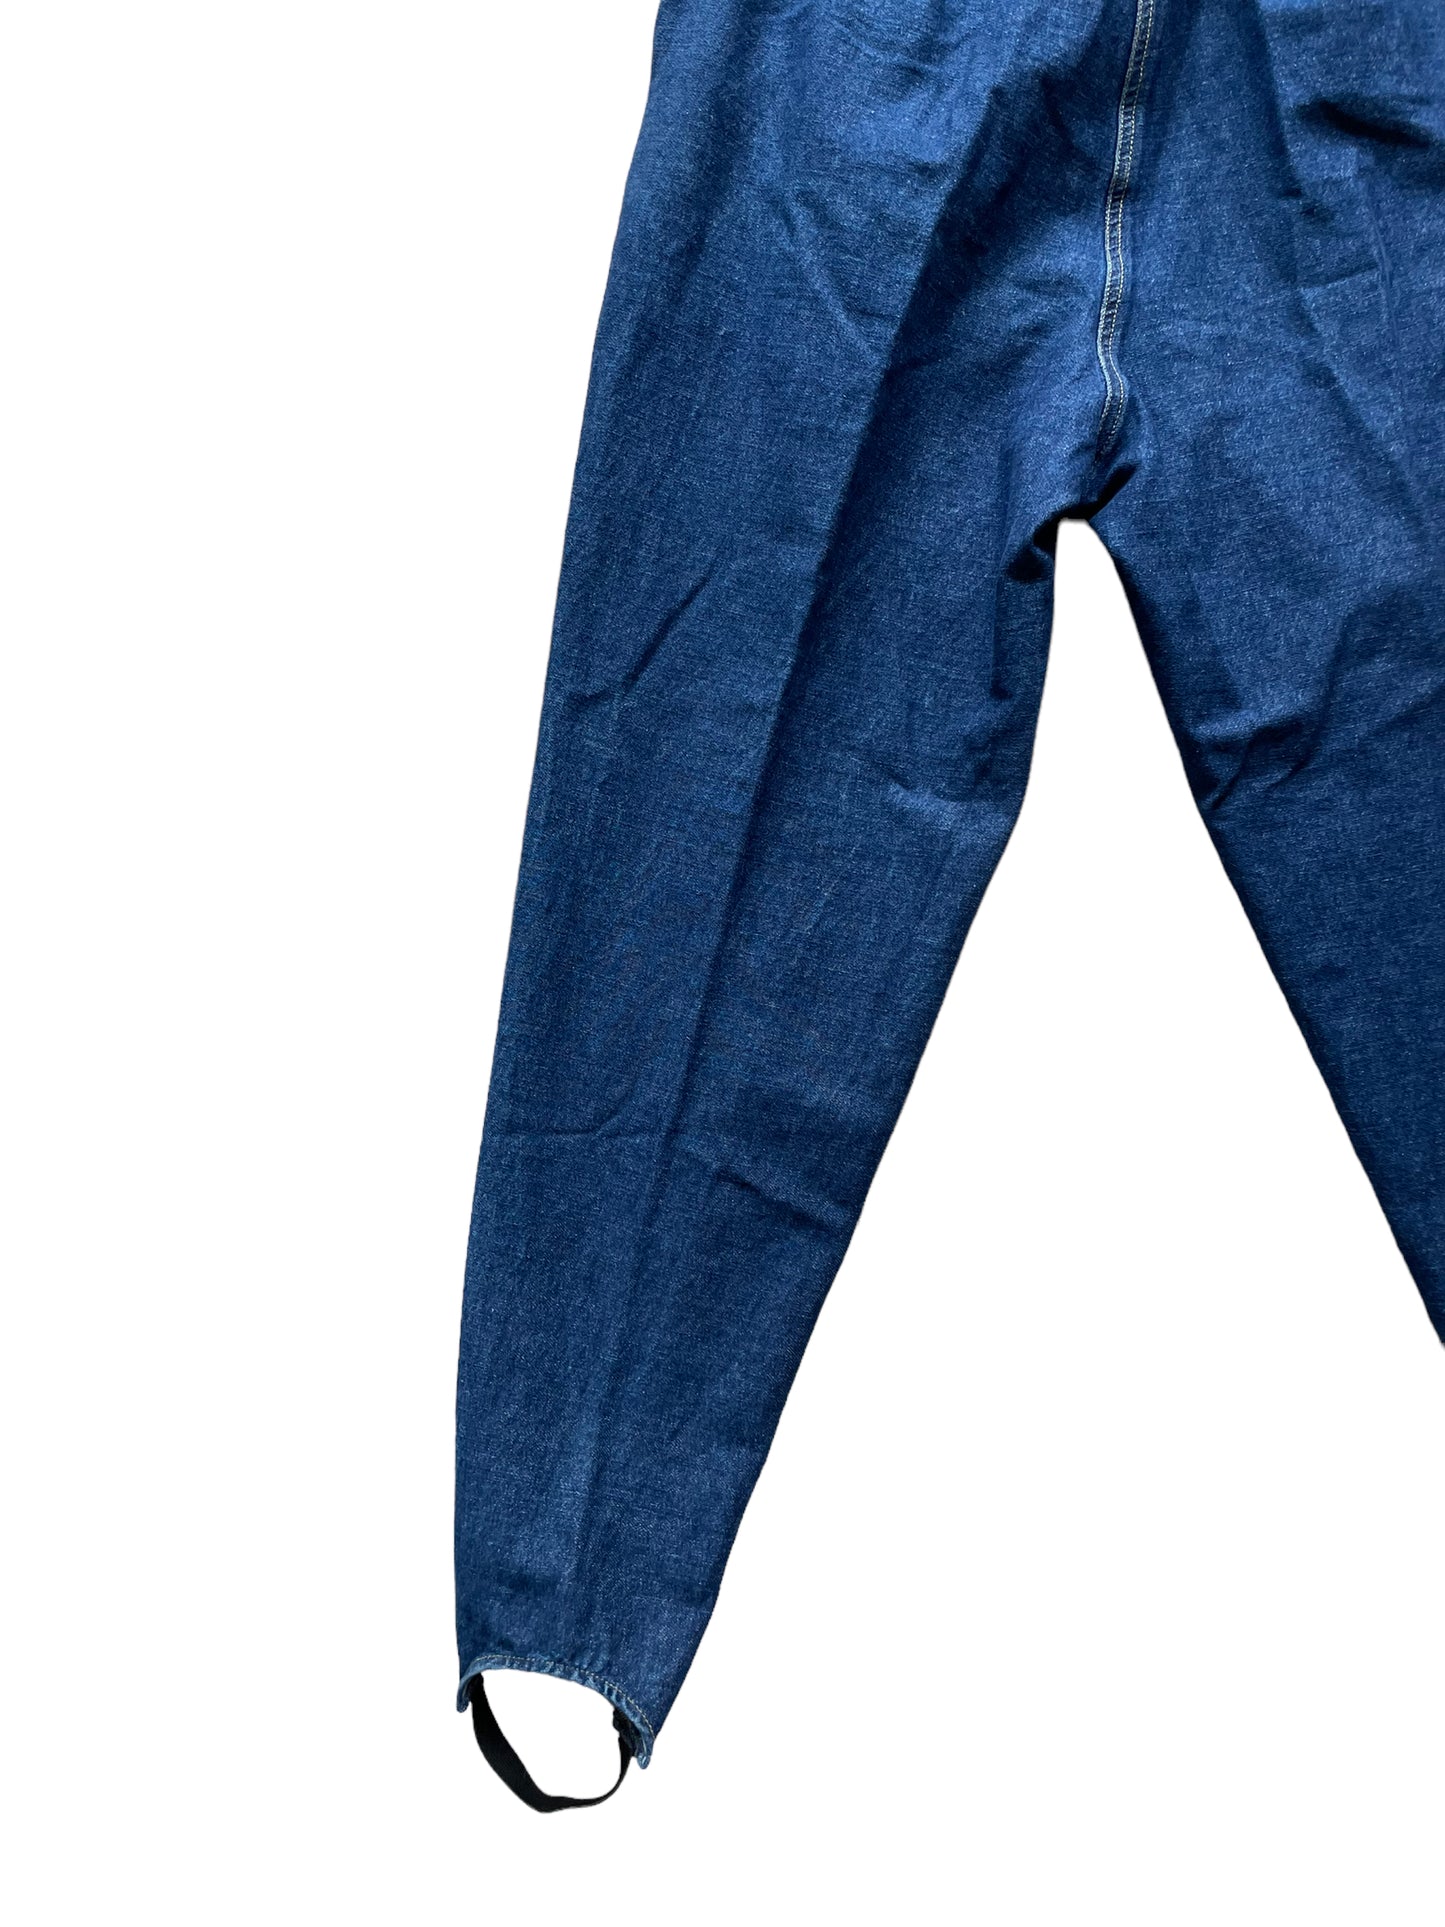 Left back leg view of Vintage Deadstock 80's Liz Claiborne Side Zip Stir Up Jeans